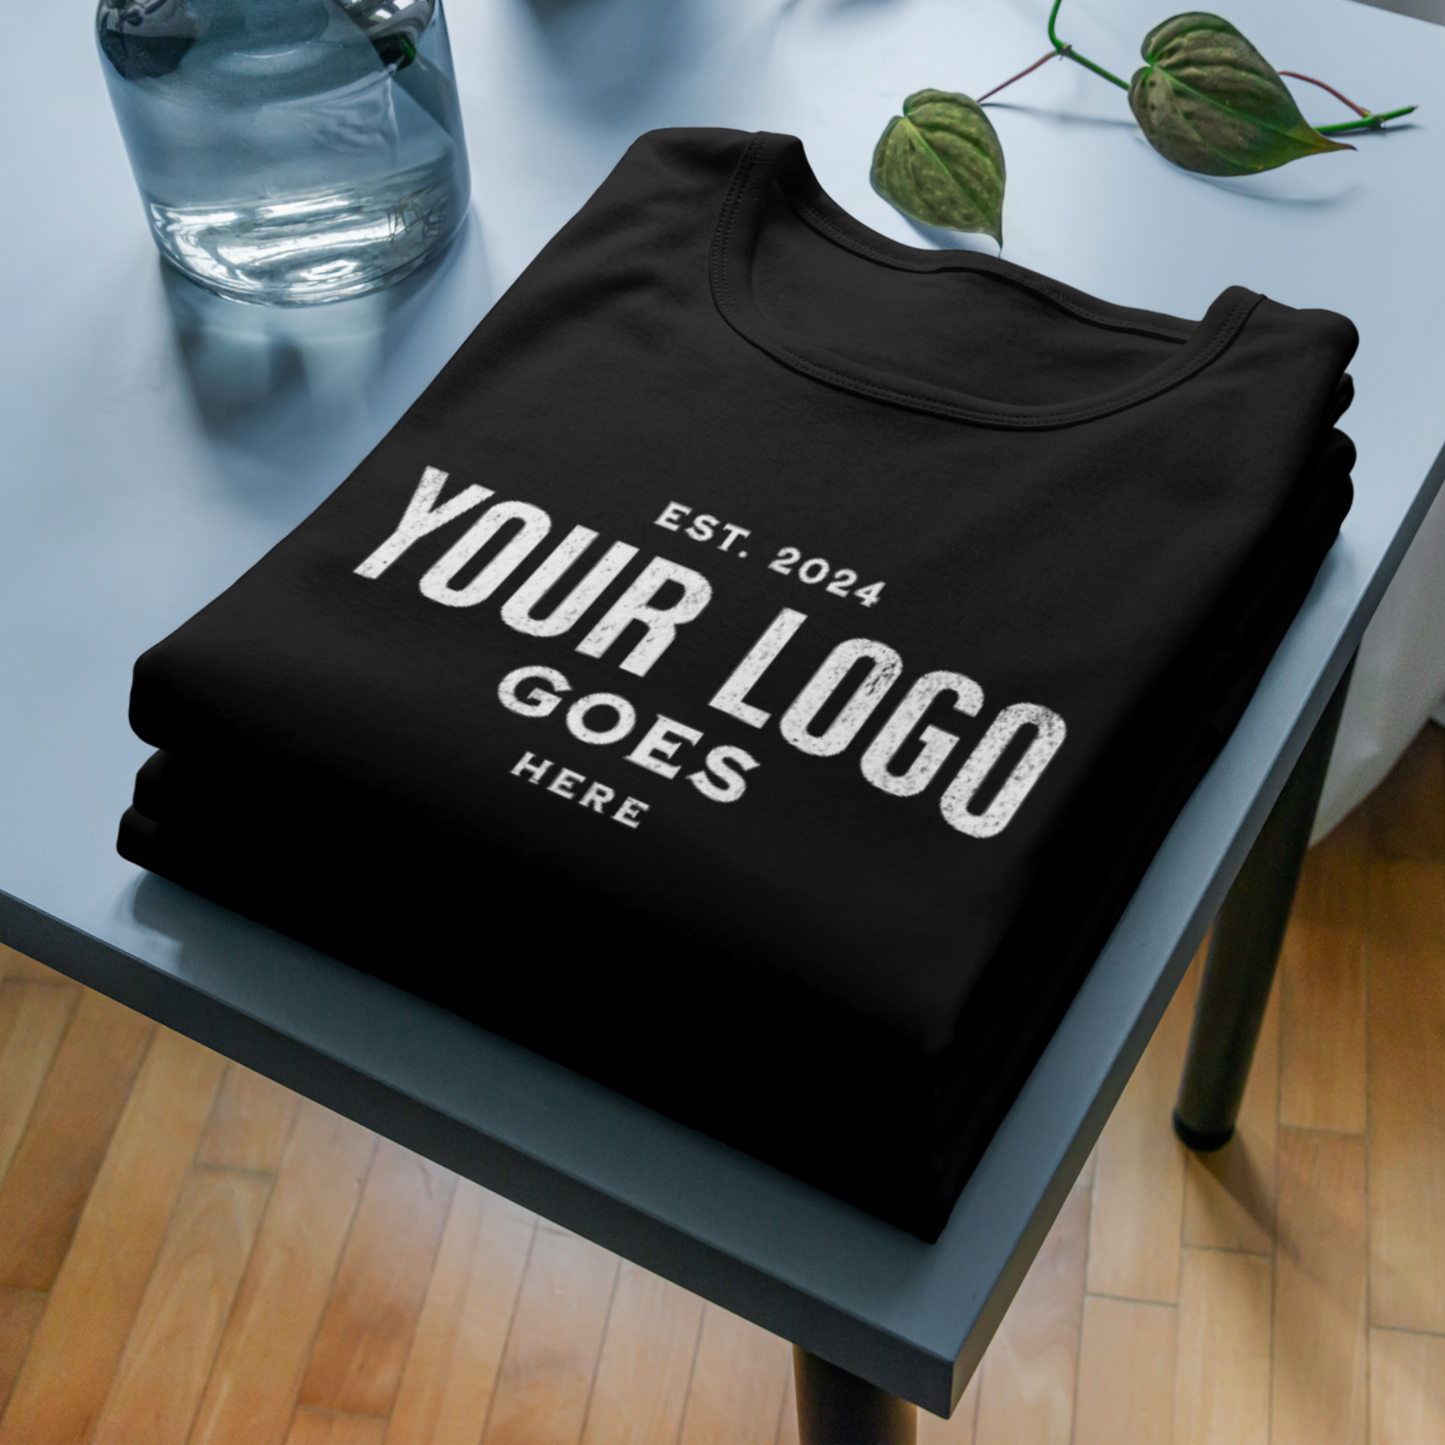 Your Text Here Shirt, Custom Shirt Design, Personalized Shirt, Customized Shirt